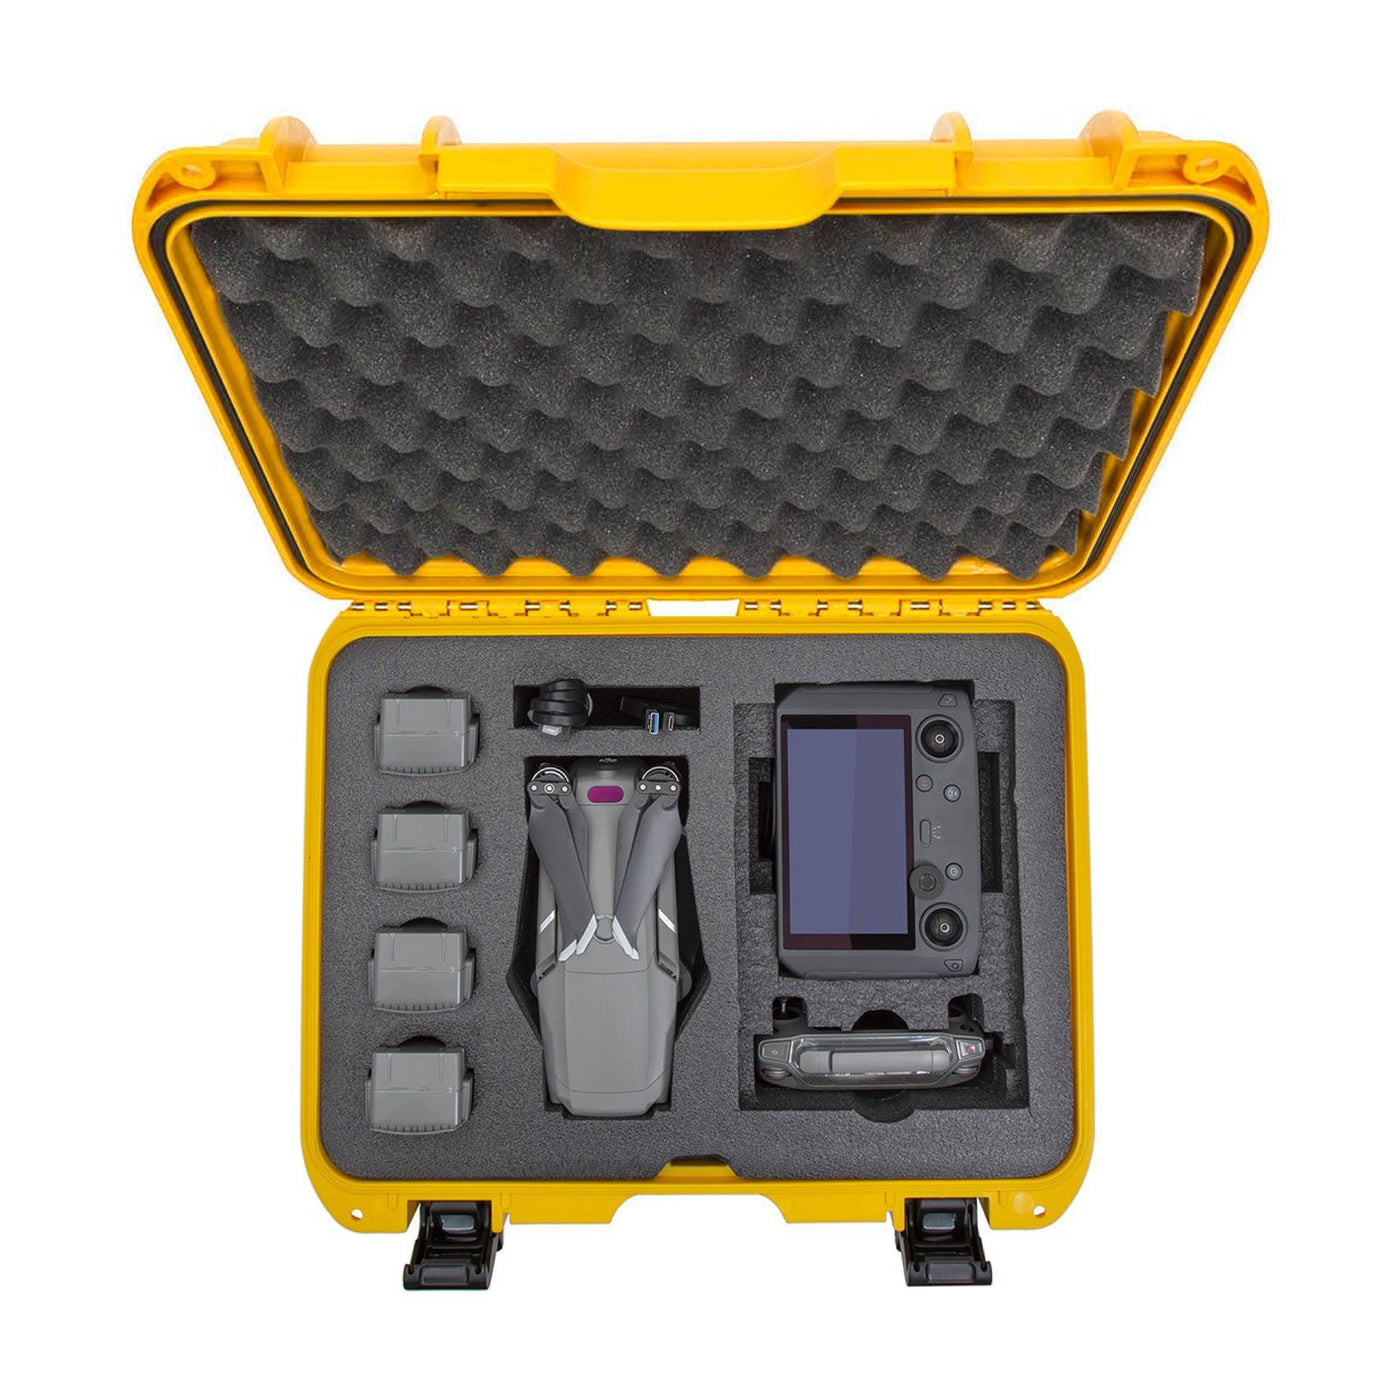 NANUK 925 DJI Mavic 2 Pro|Zoom + Smart Controller-Drone Case-Black-NANUK